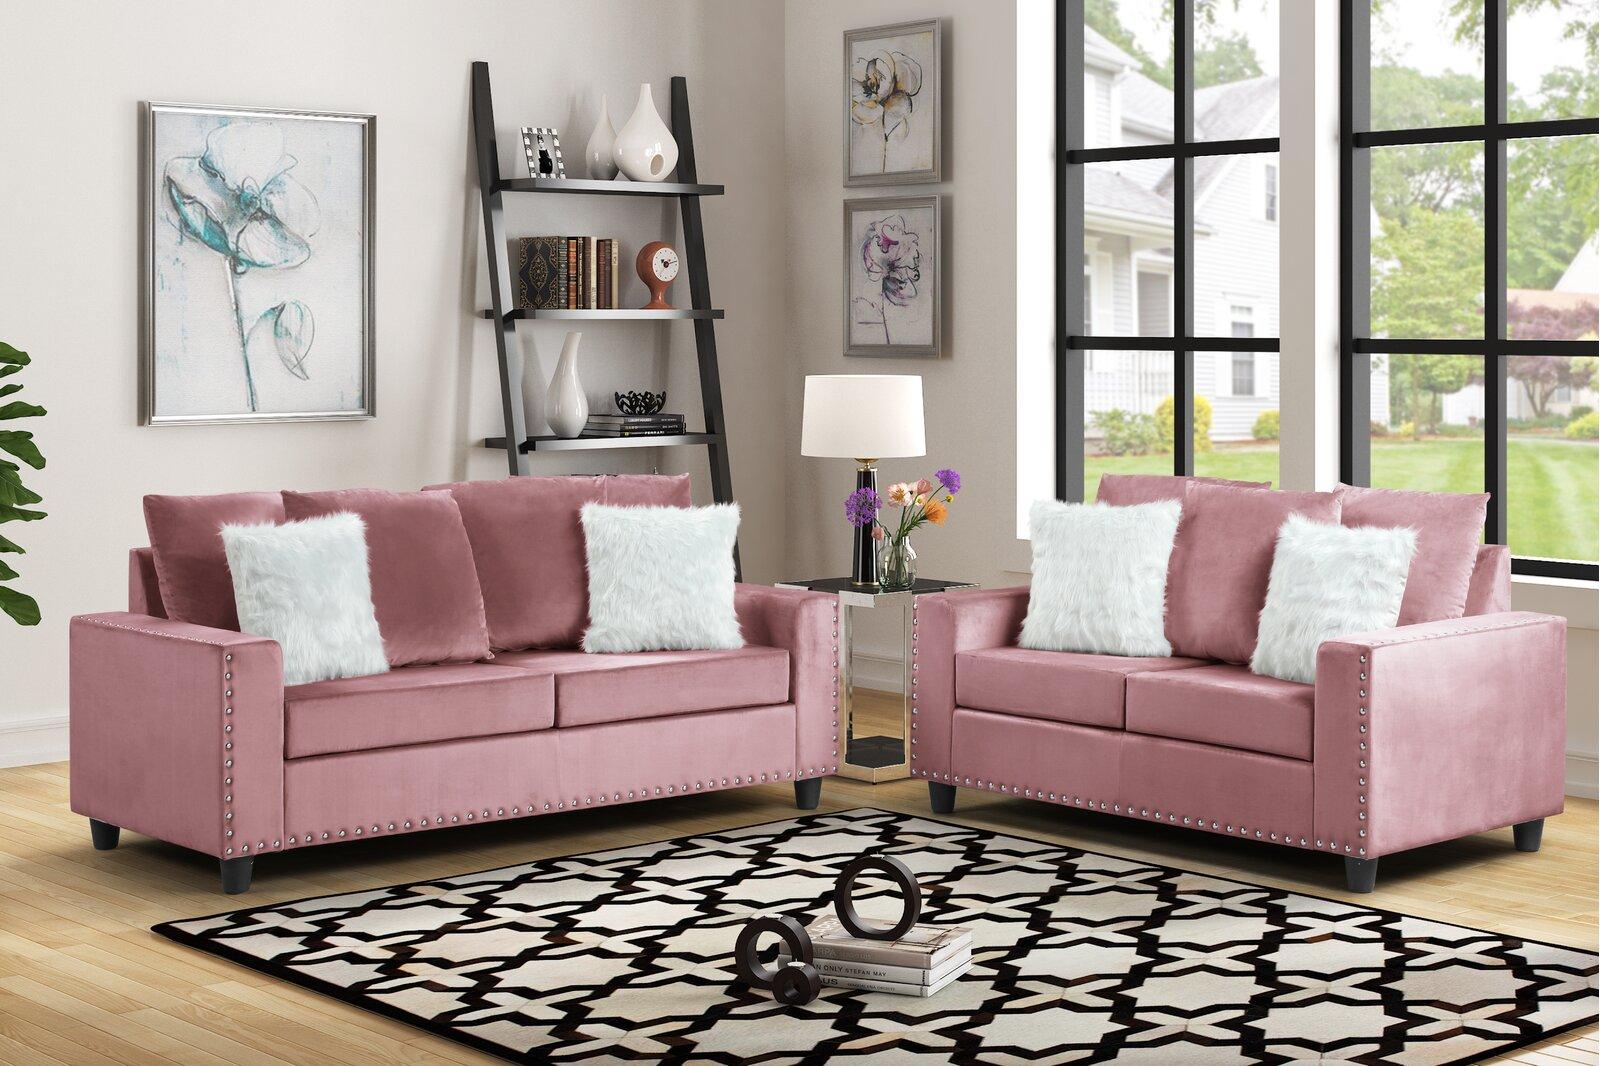 

    
Pink Fabric Sofa MORRIS Galaxy Home Contemporary Modern
